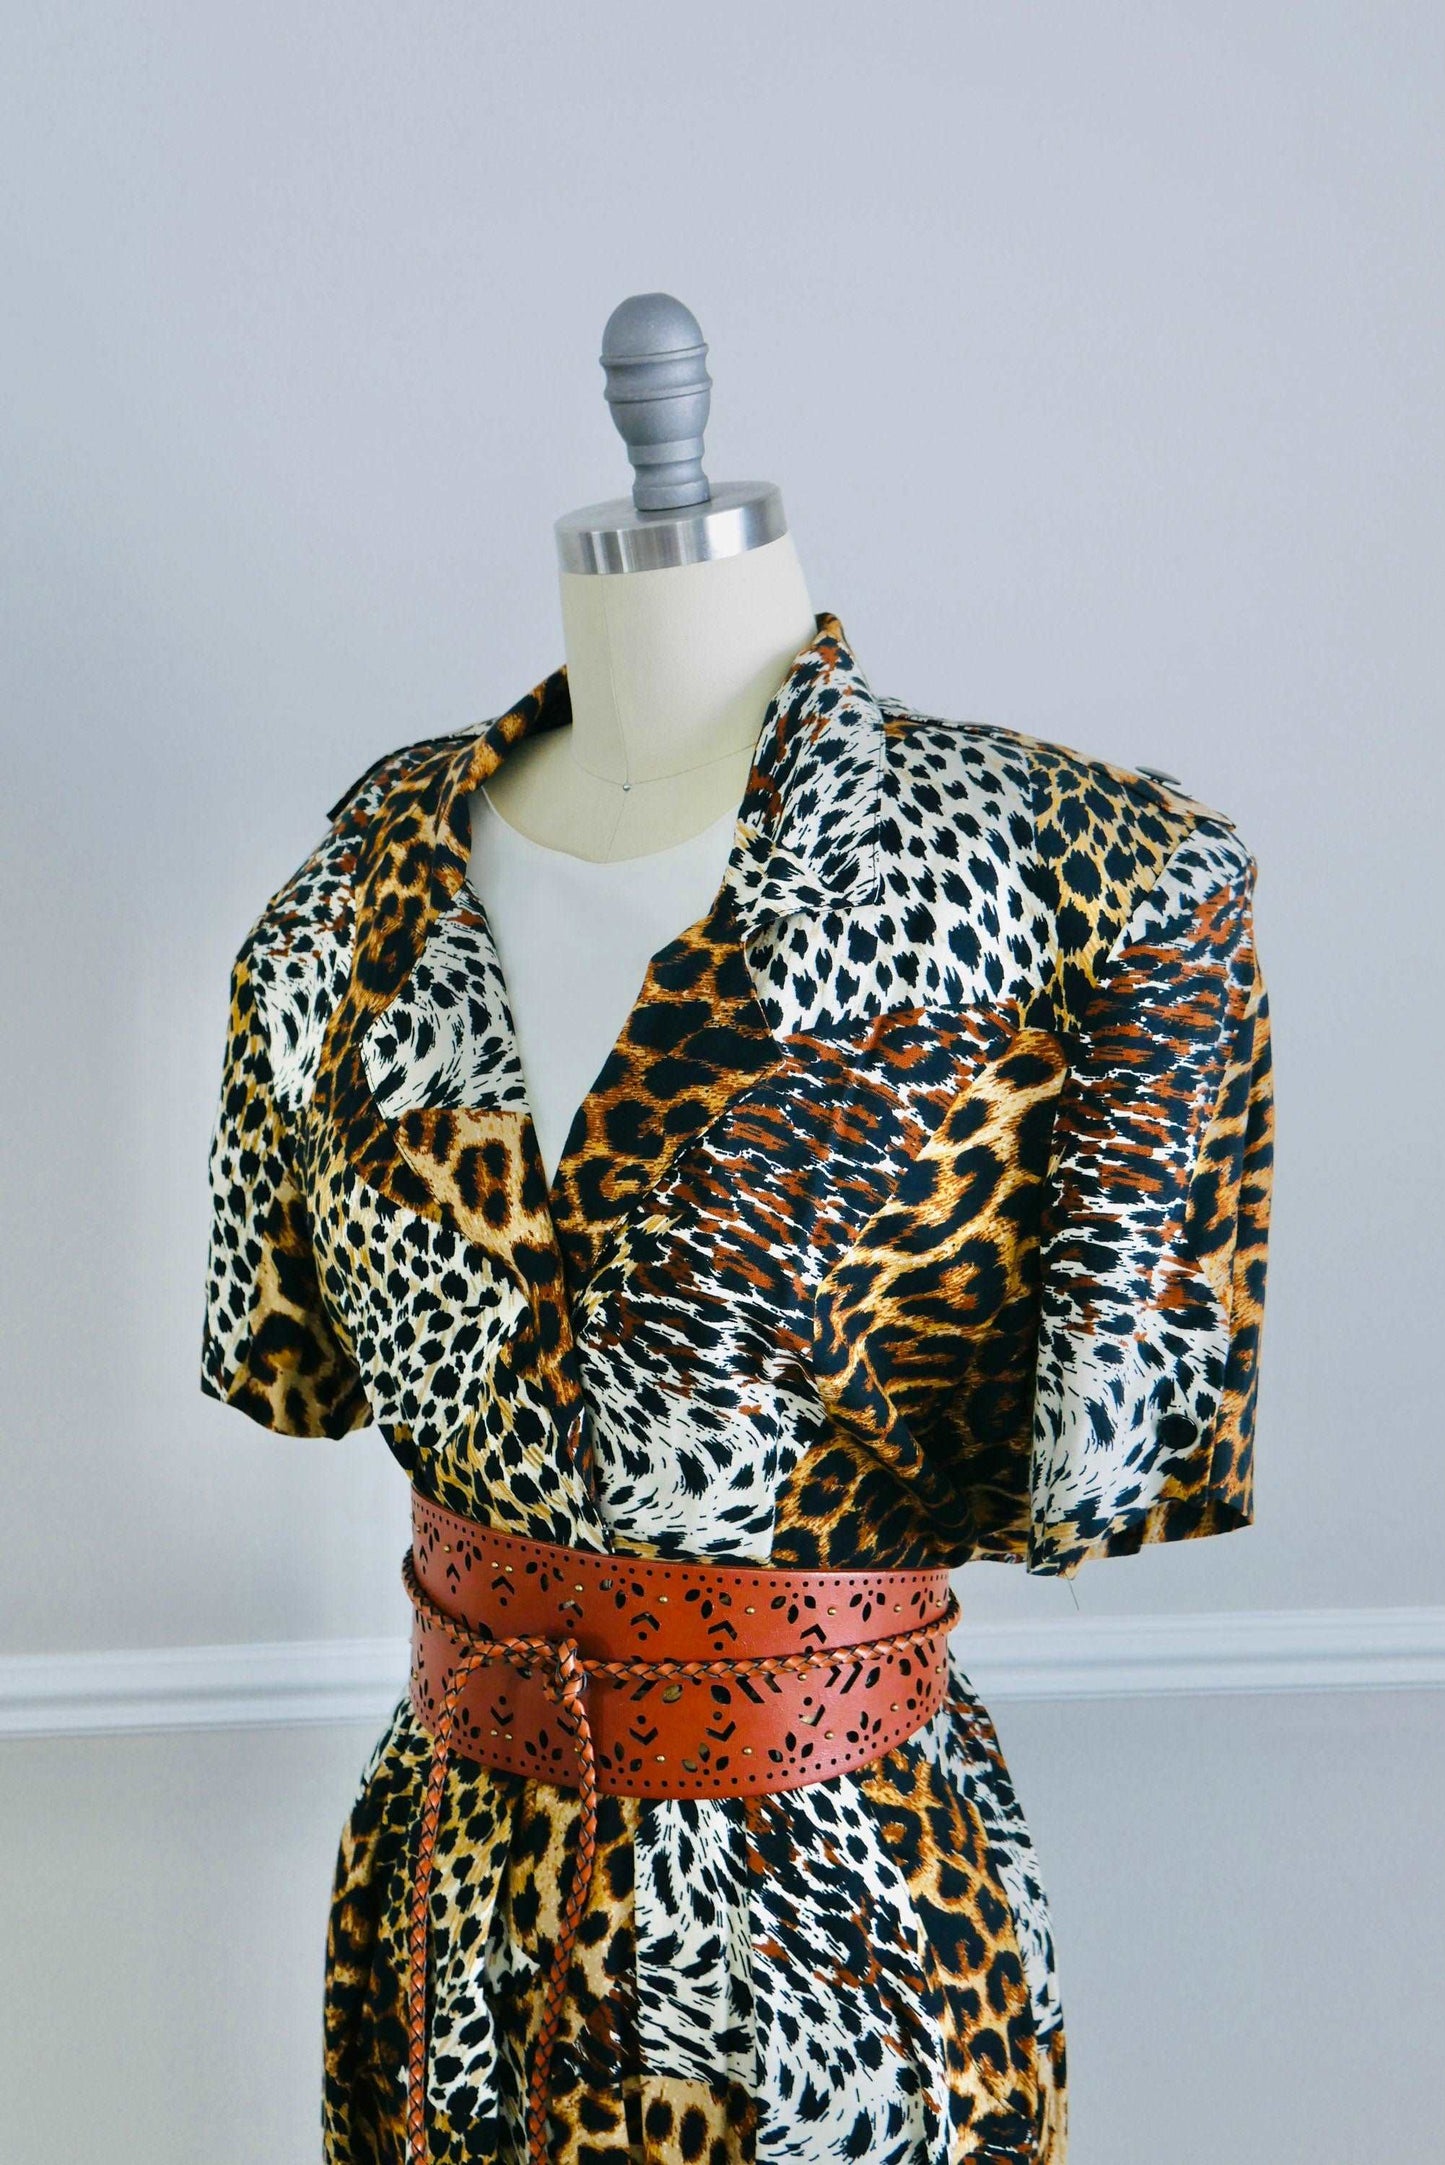 ON SALE Vintage 1980s Leopard Print Dress / 80s retro rayon animal print dress size M